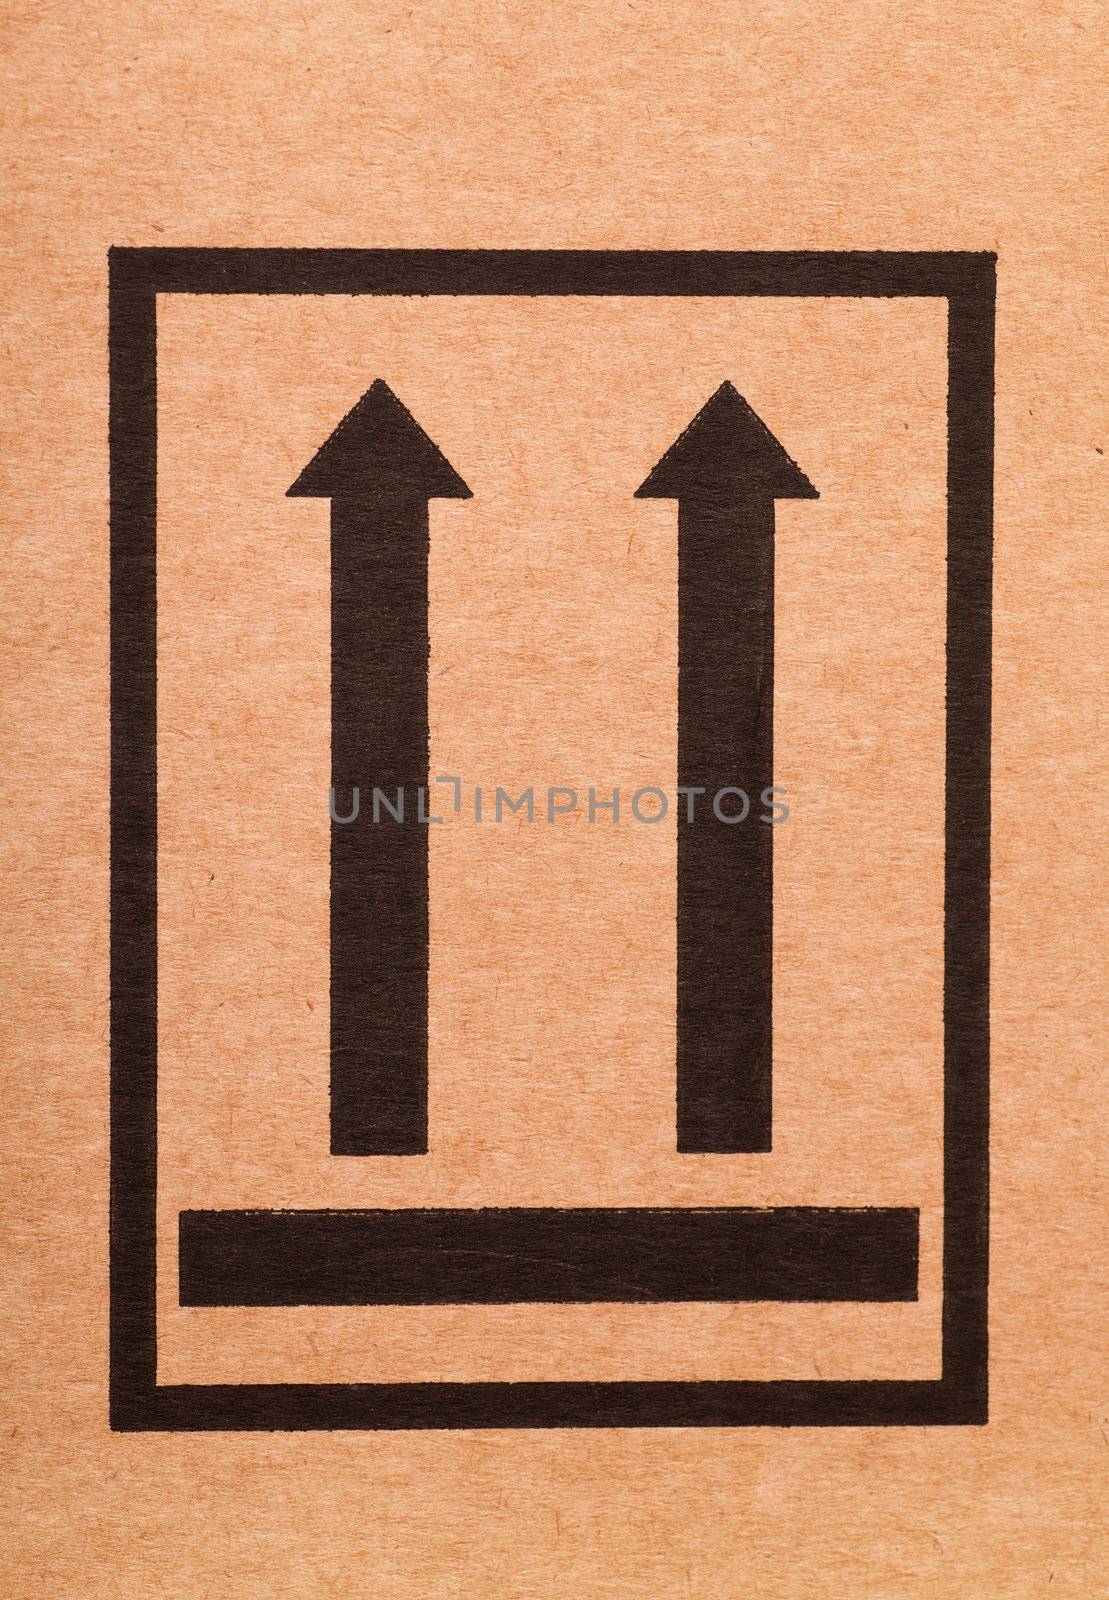 Cardboard sign by AGorohov